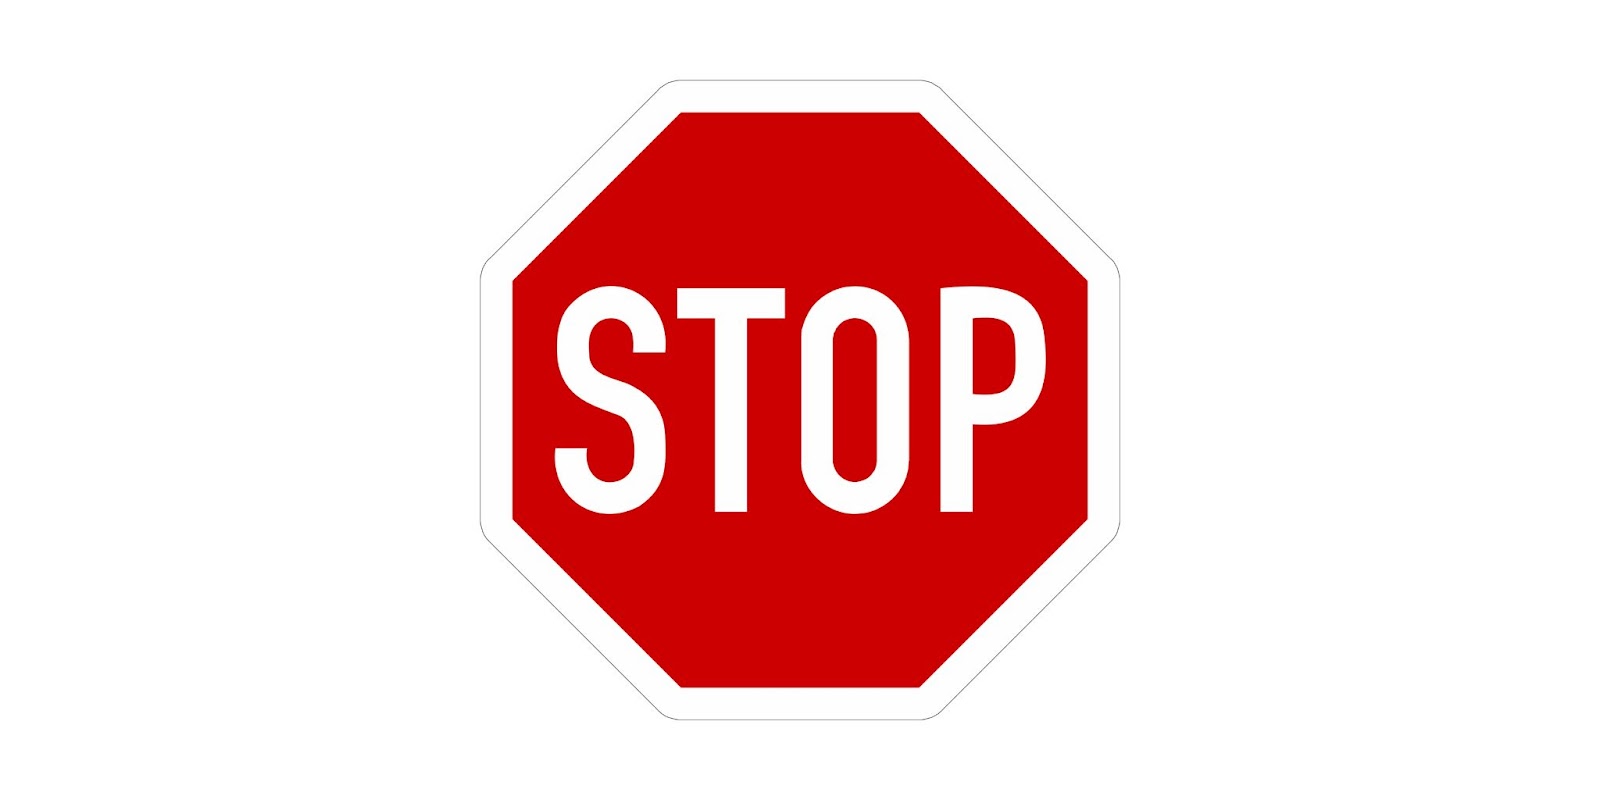 Arkansas Road Signs stop sign